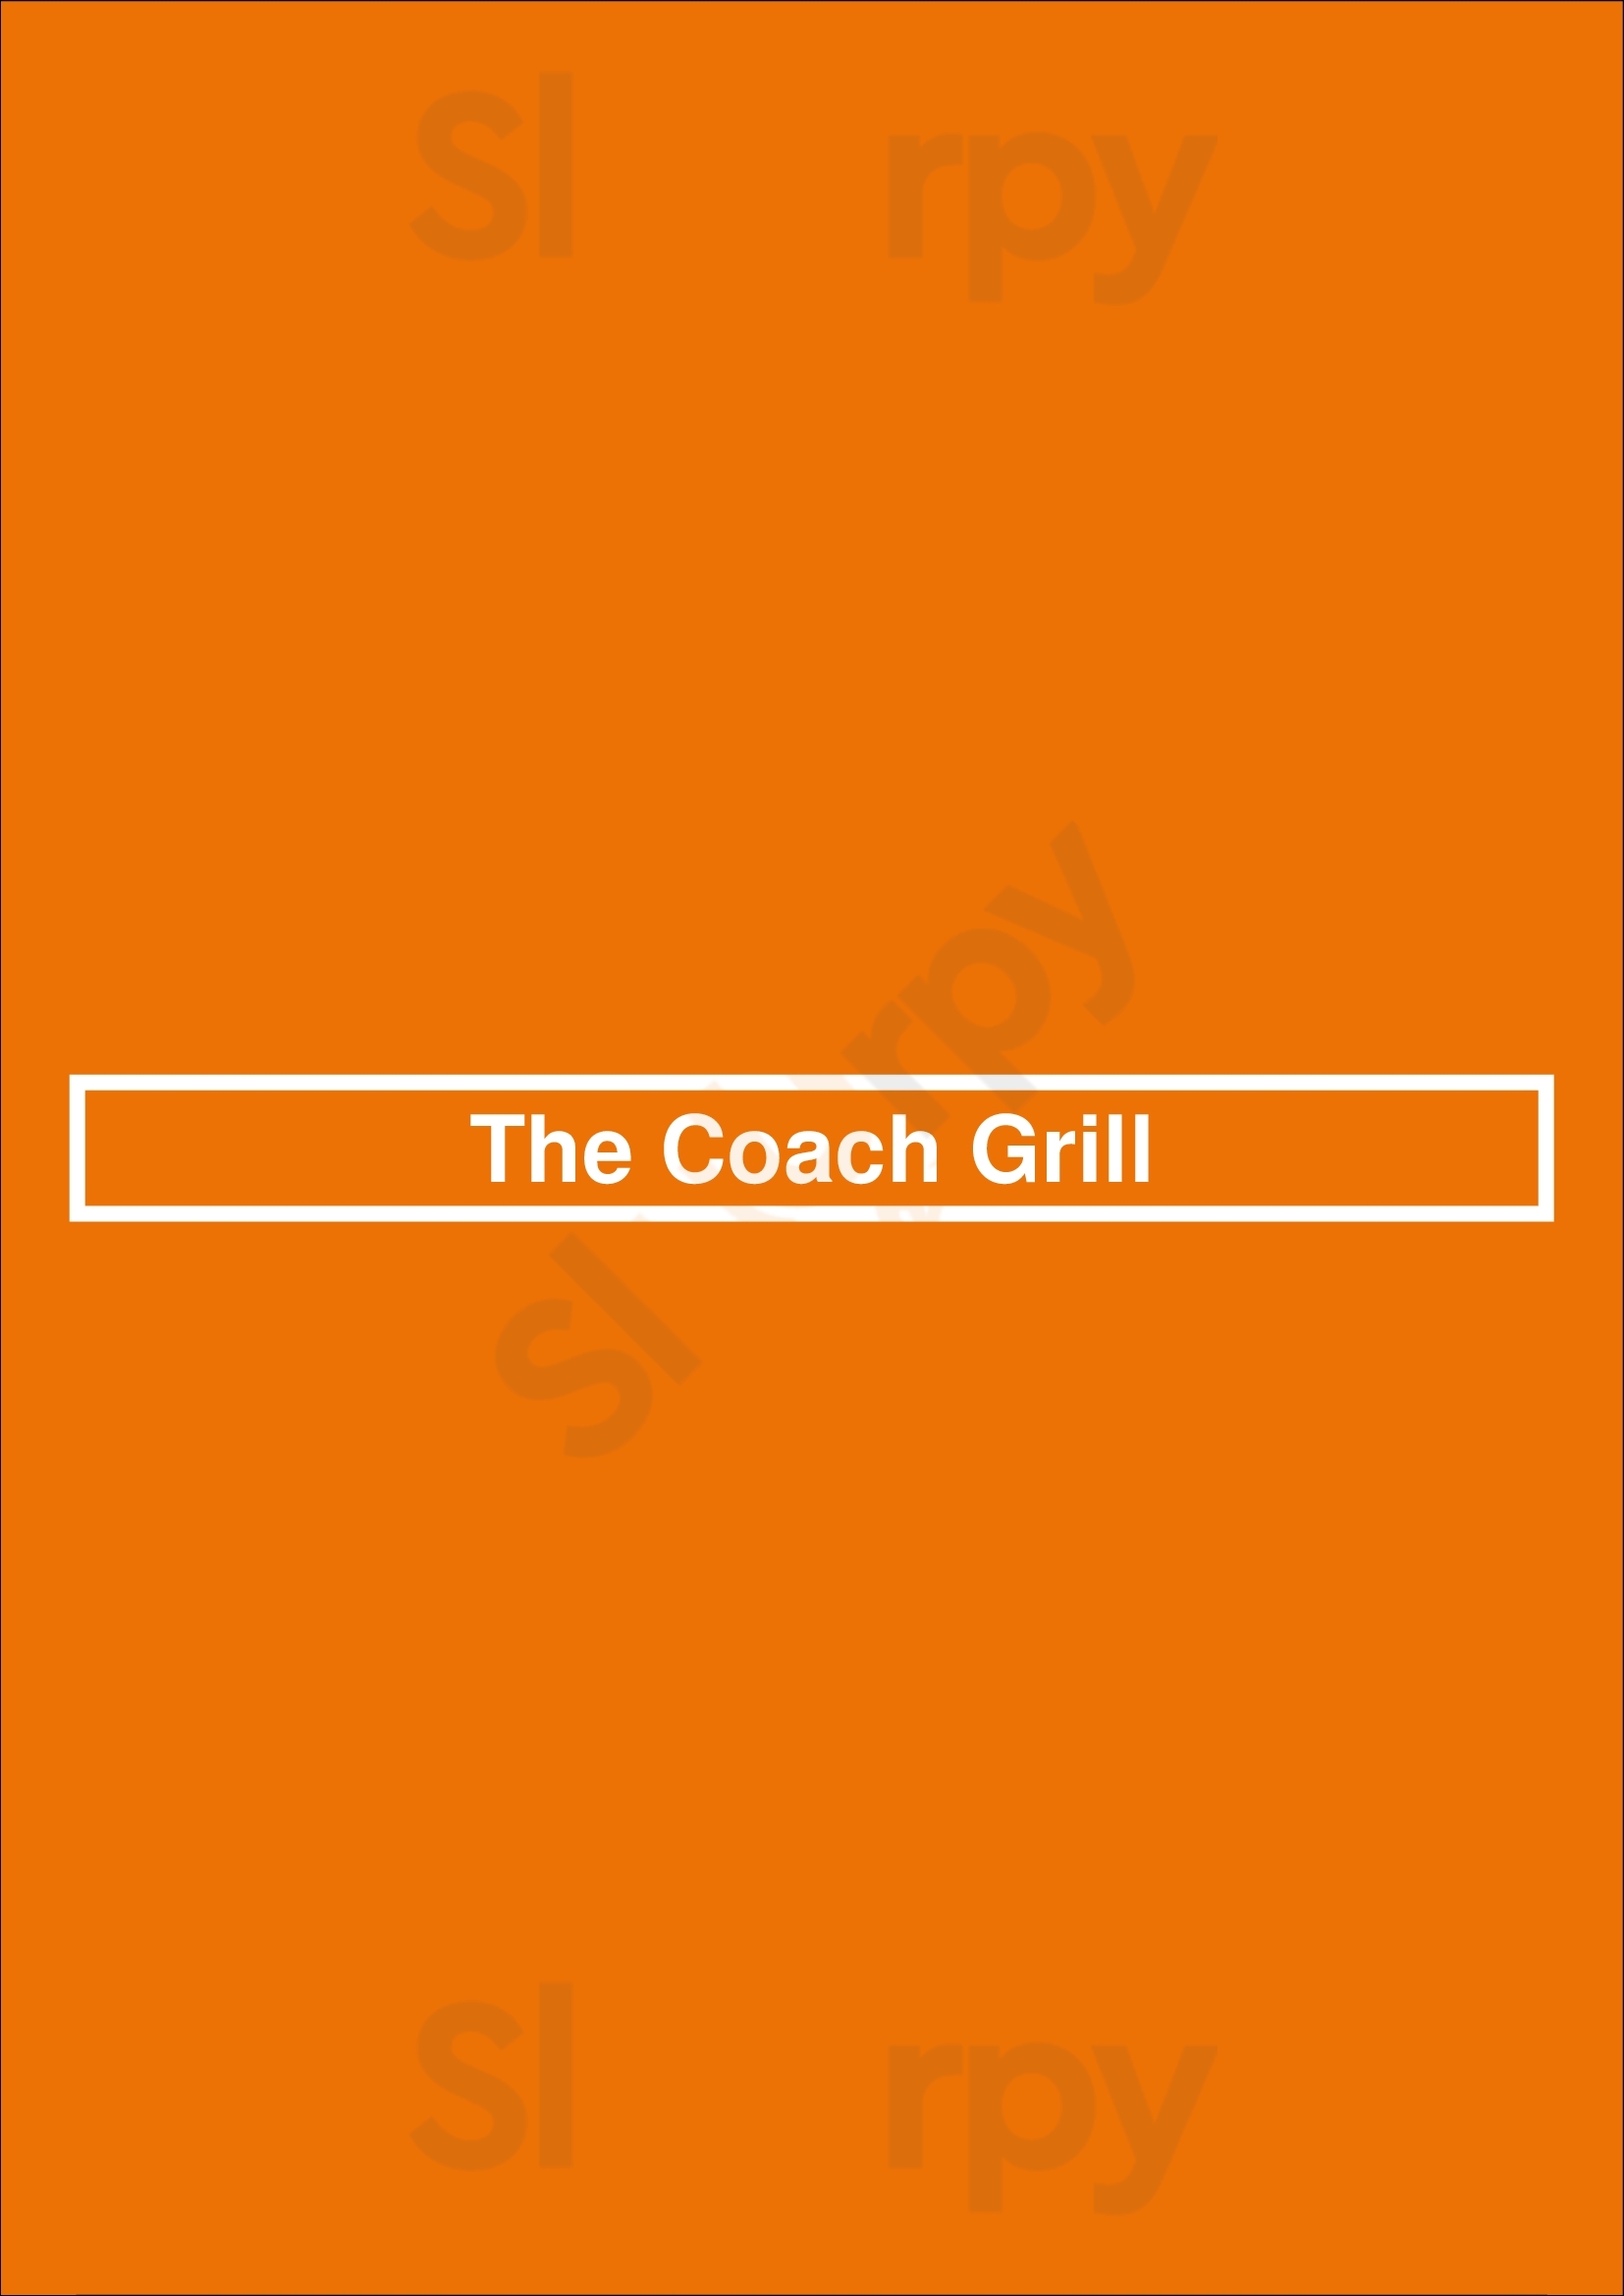 Coach Grill Wayland Menu - 1